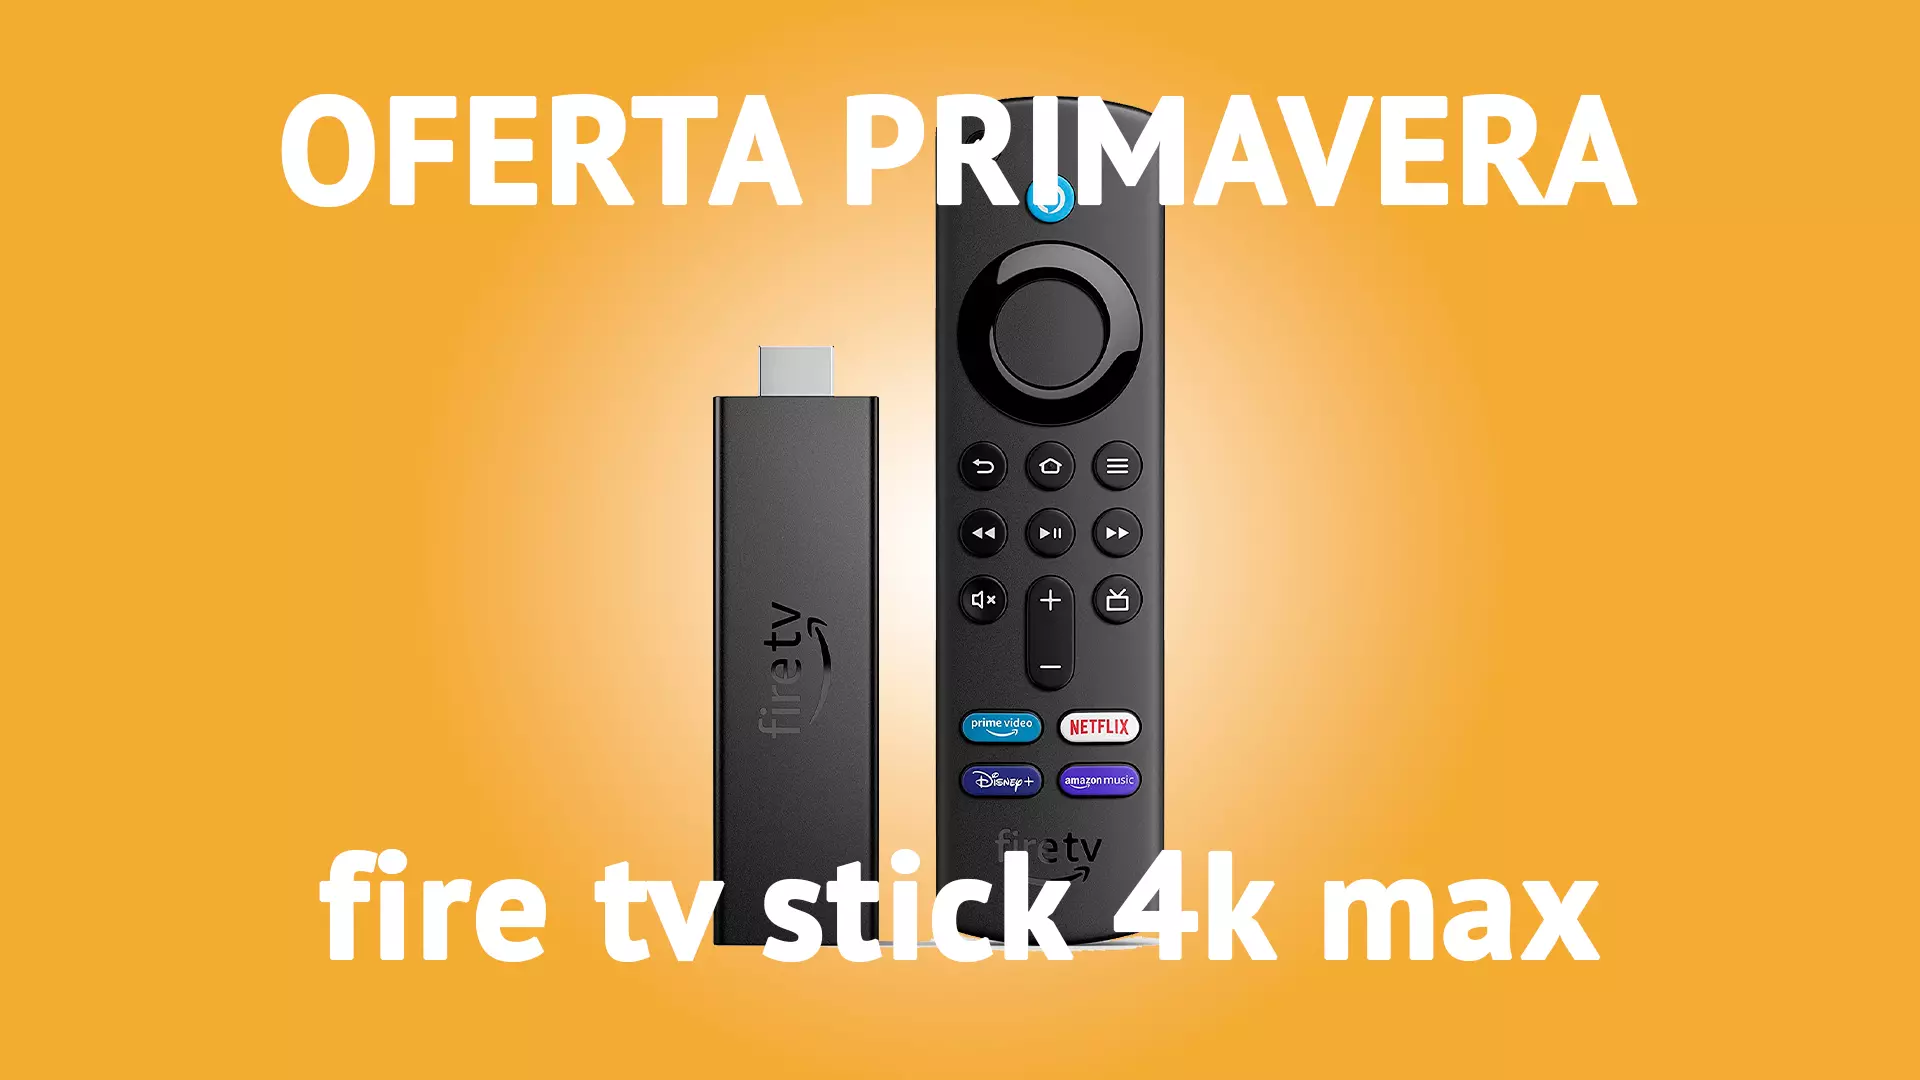 Fire TV Stick 4K Max en oferta de primavera por solo 39,99€Fire TV Stick 4K Max en oferta de primavera por solo 39,99€